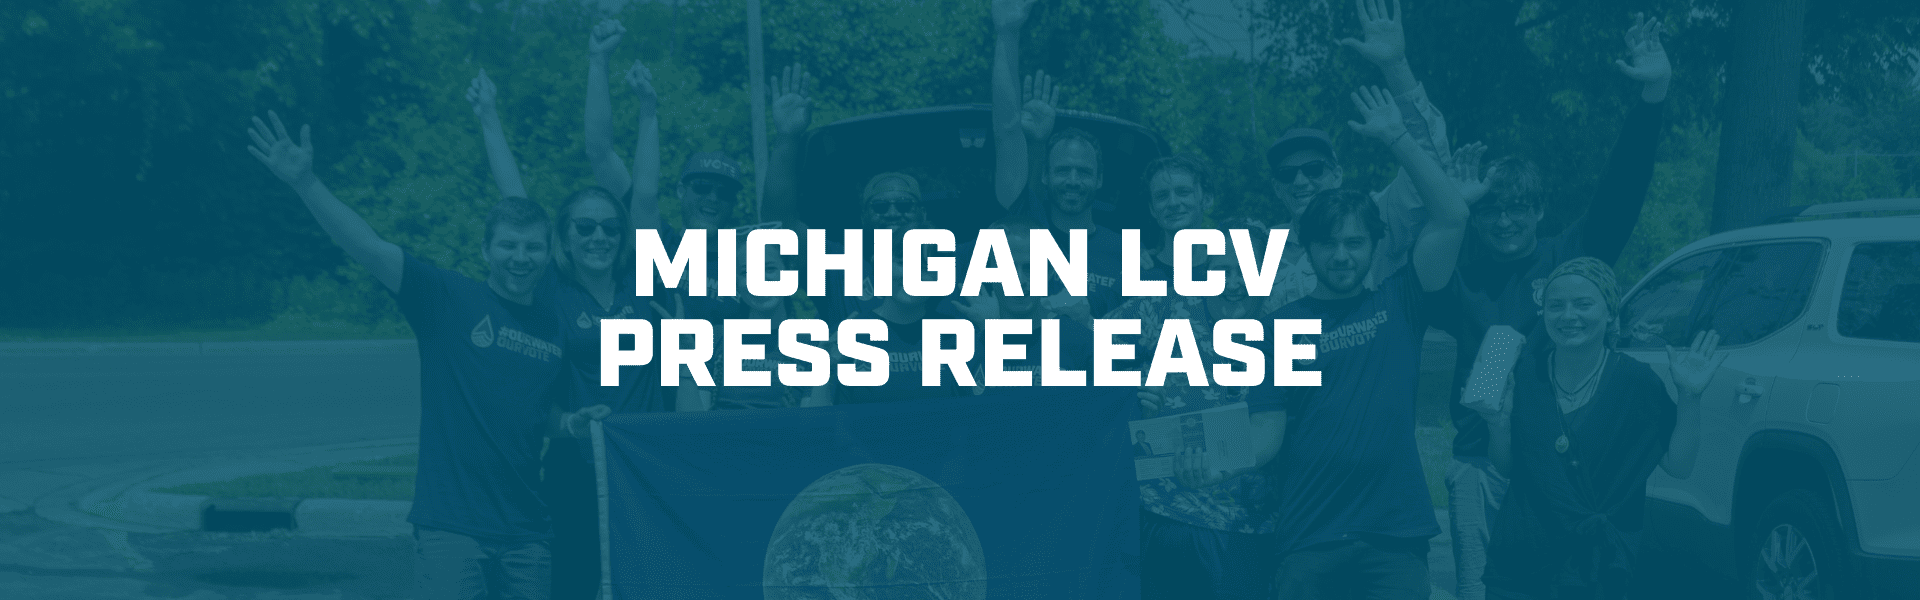 Michigan LCV hails Biden administration announcement delaying LNG expansion